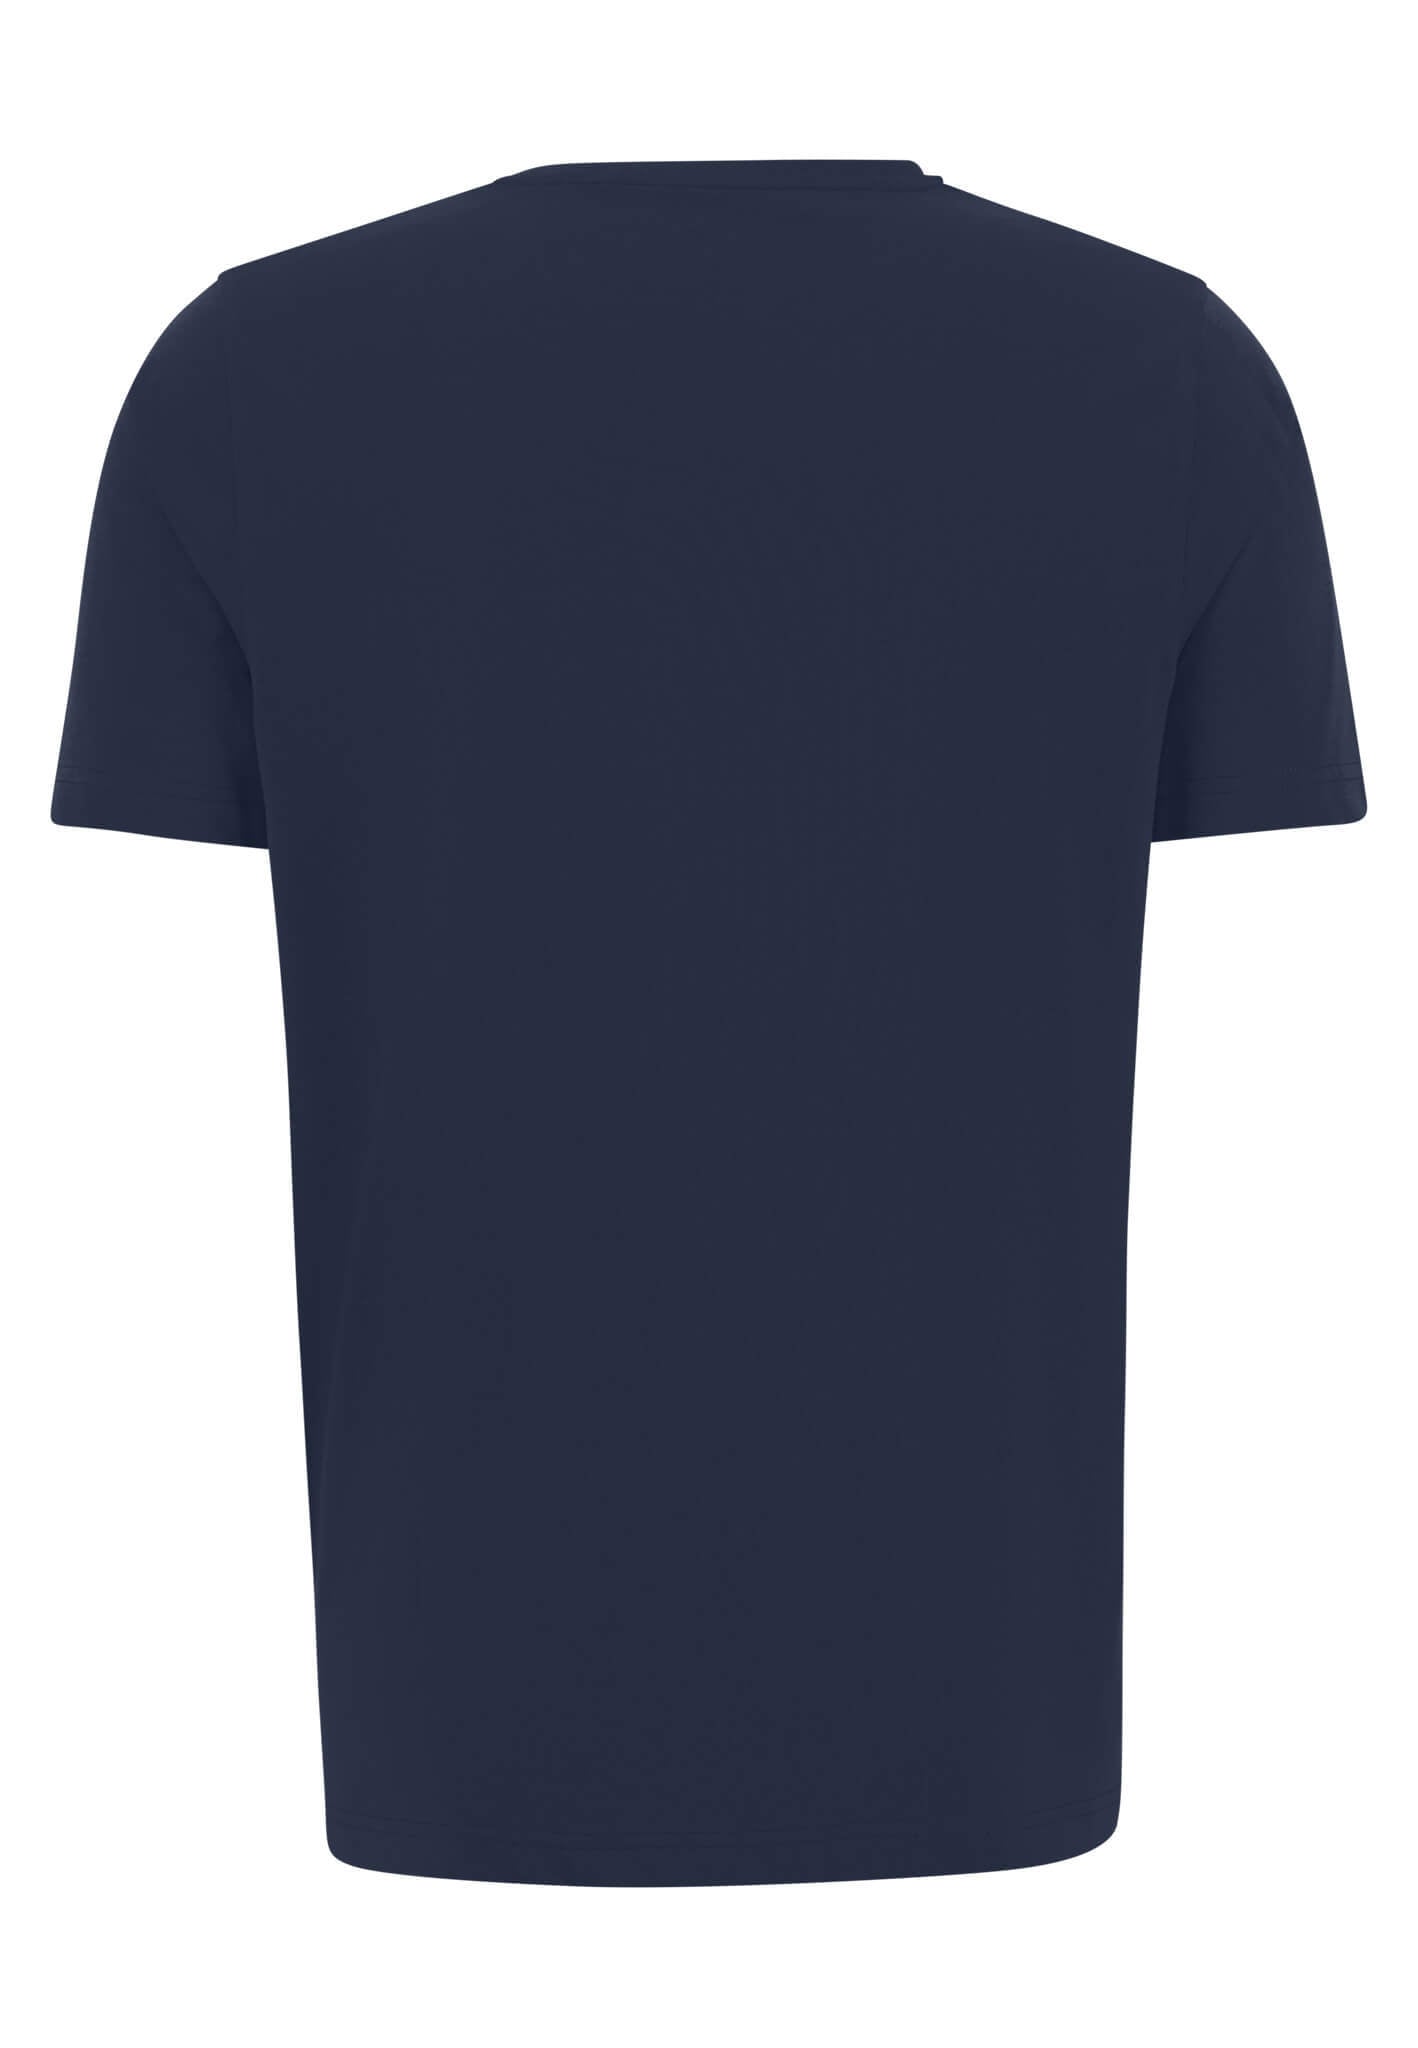 Fynch Hatton T-Shirt, O-Neck in regular Classic fit, Navy Melange